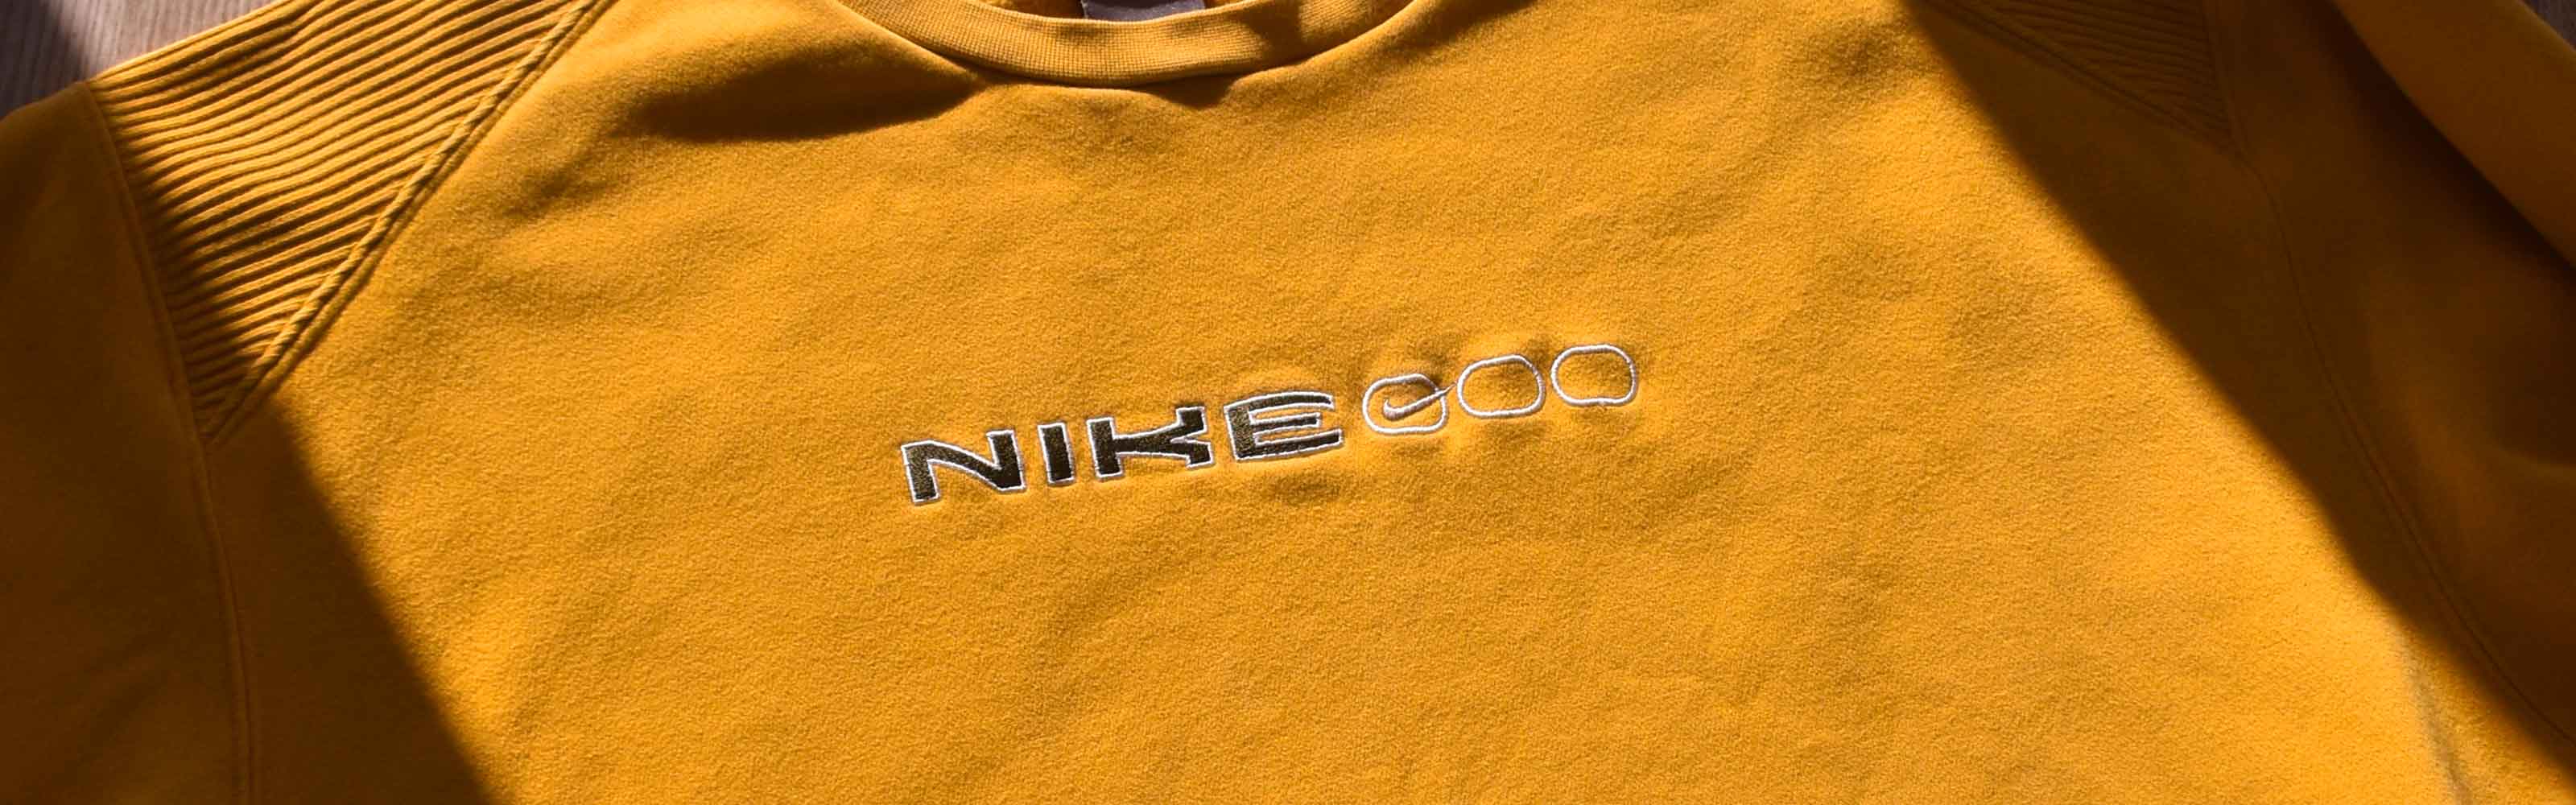 Shop Vintage Nike Clothing